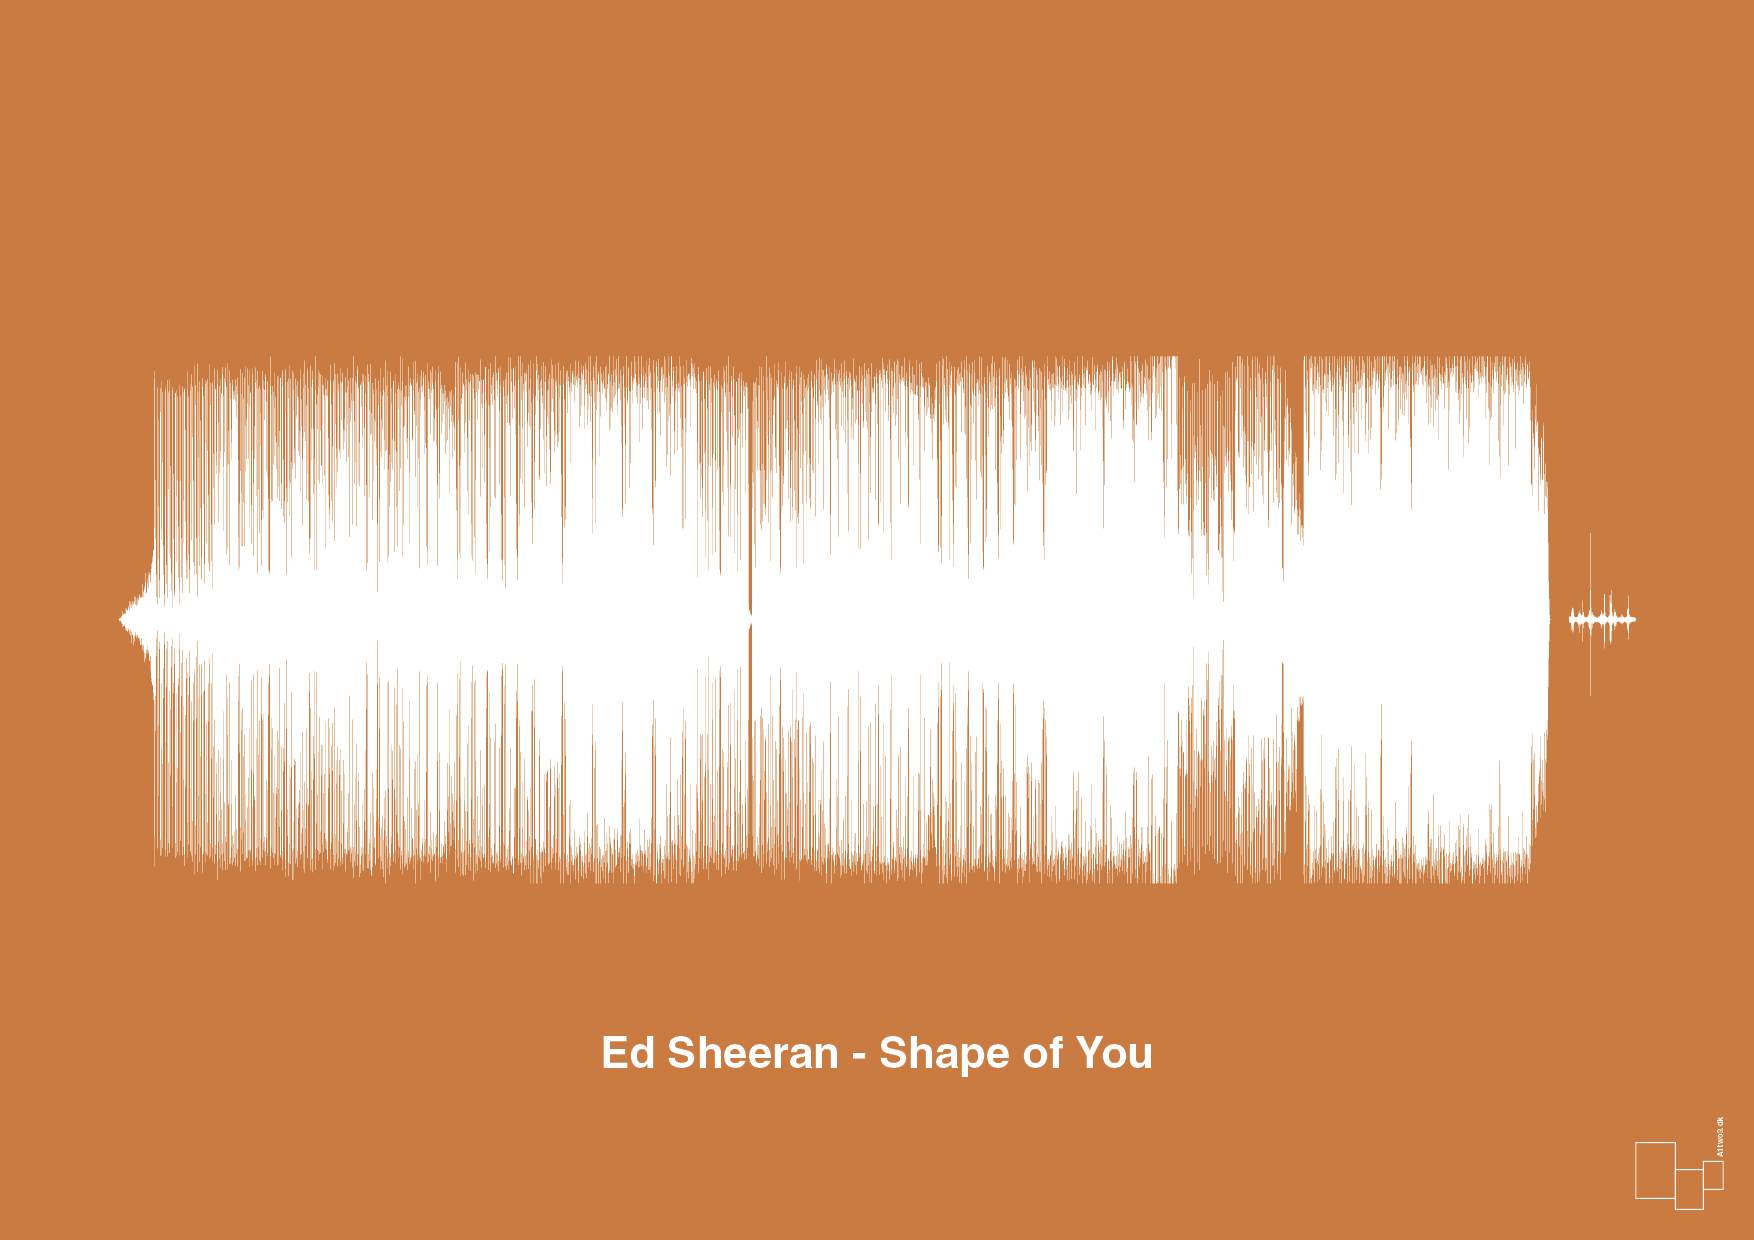 ed sheeran - shape of you - Plakat med Musik i Rumba Orange